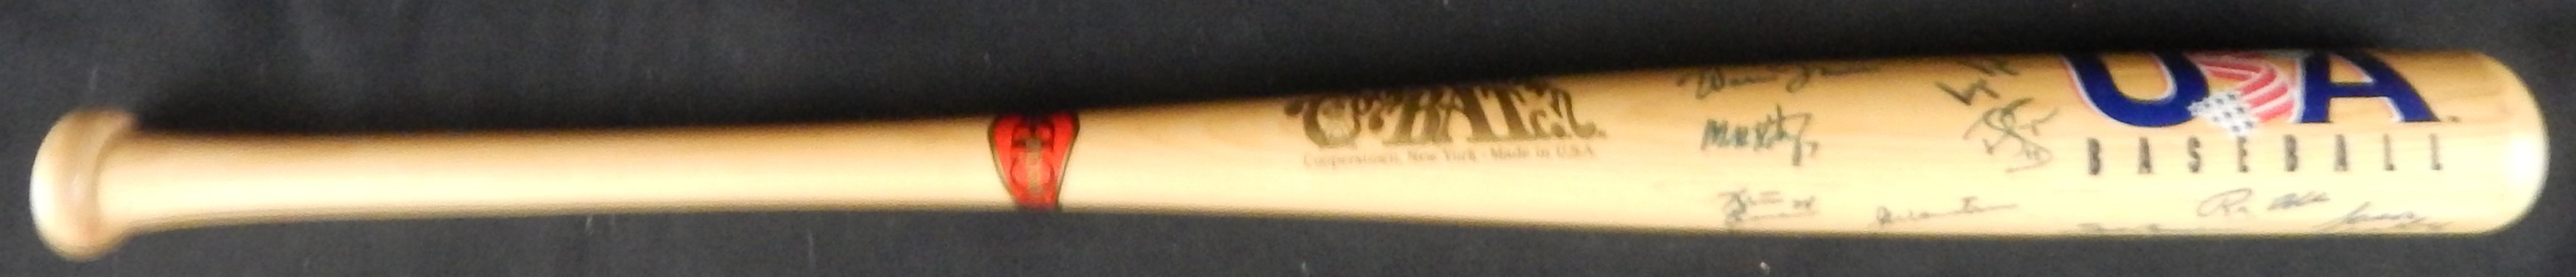 1996 Olympic Team USA Signed Bat